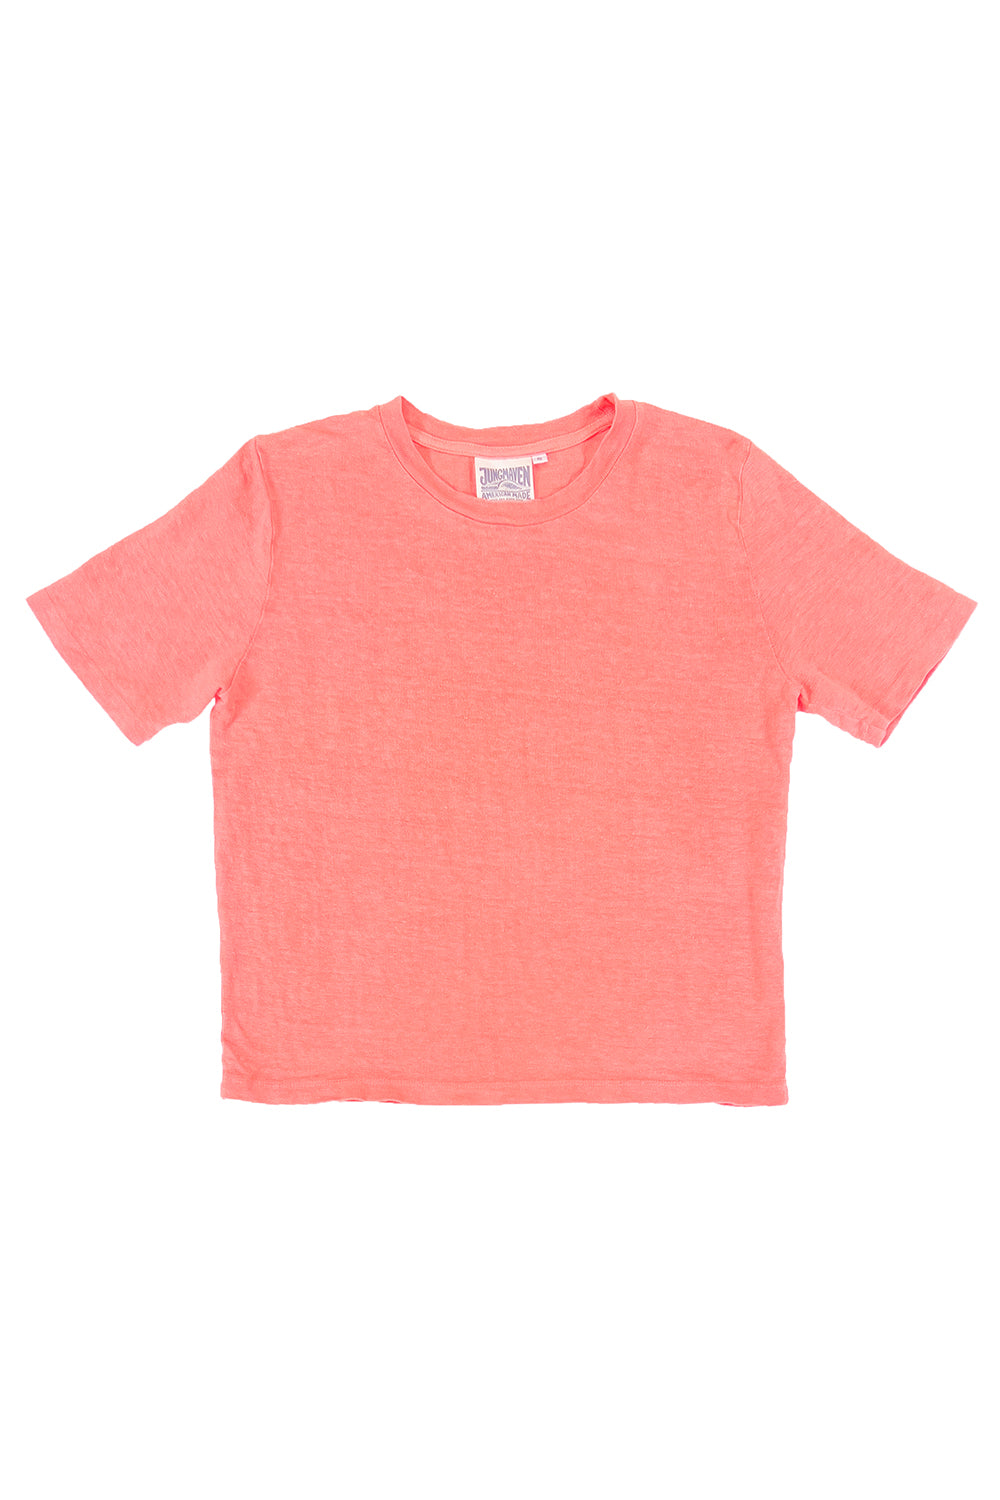 Dakota - 100% Hemp Cropped Tee | Jungmaven Hemp Clothing & Accessories / Color: Pink Salmon